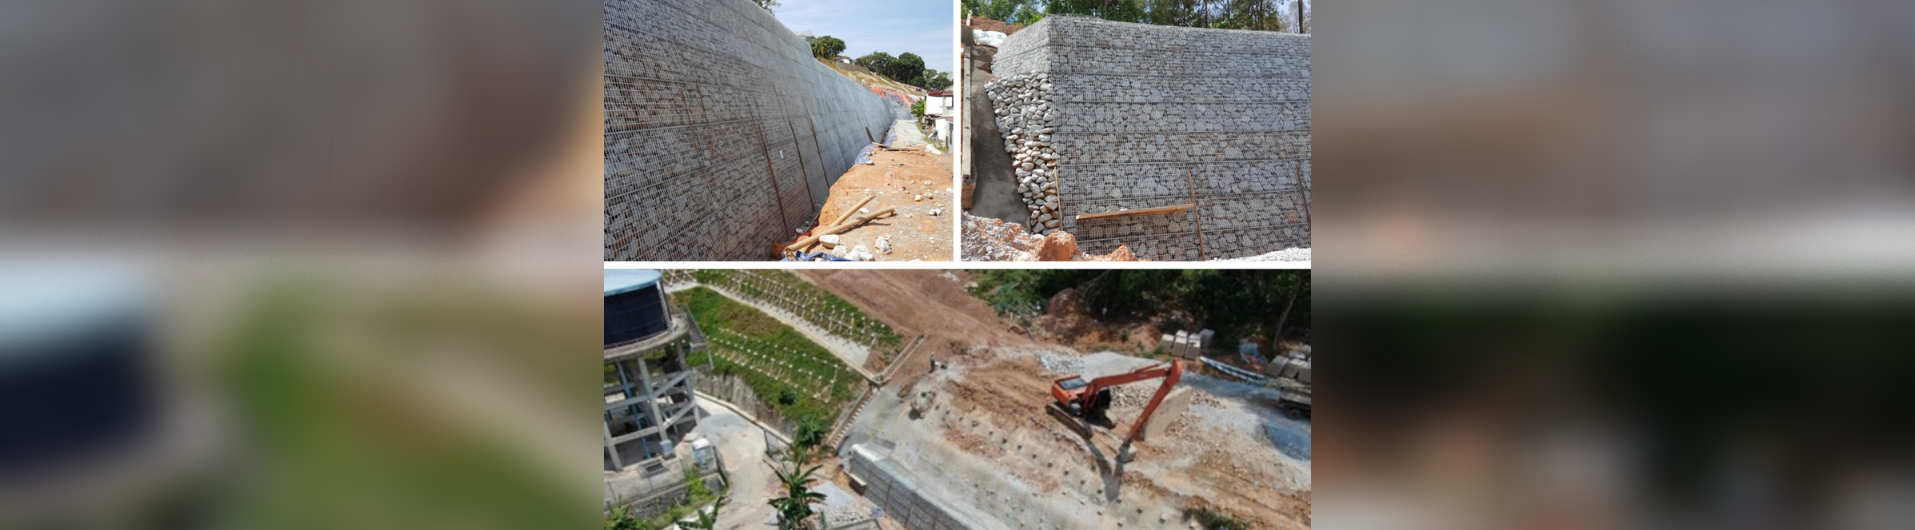 Slope Strengthening and Rehabilitation works at Port Dickson, Negeri Sembilan, Malaysia 